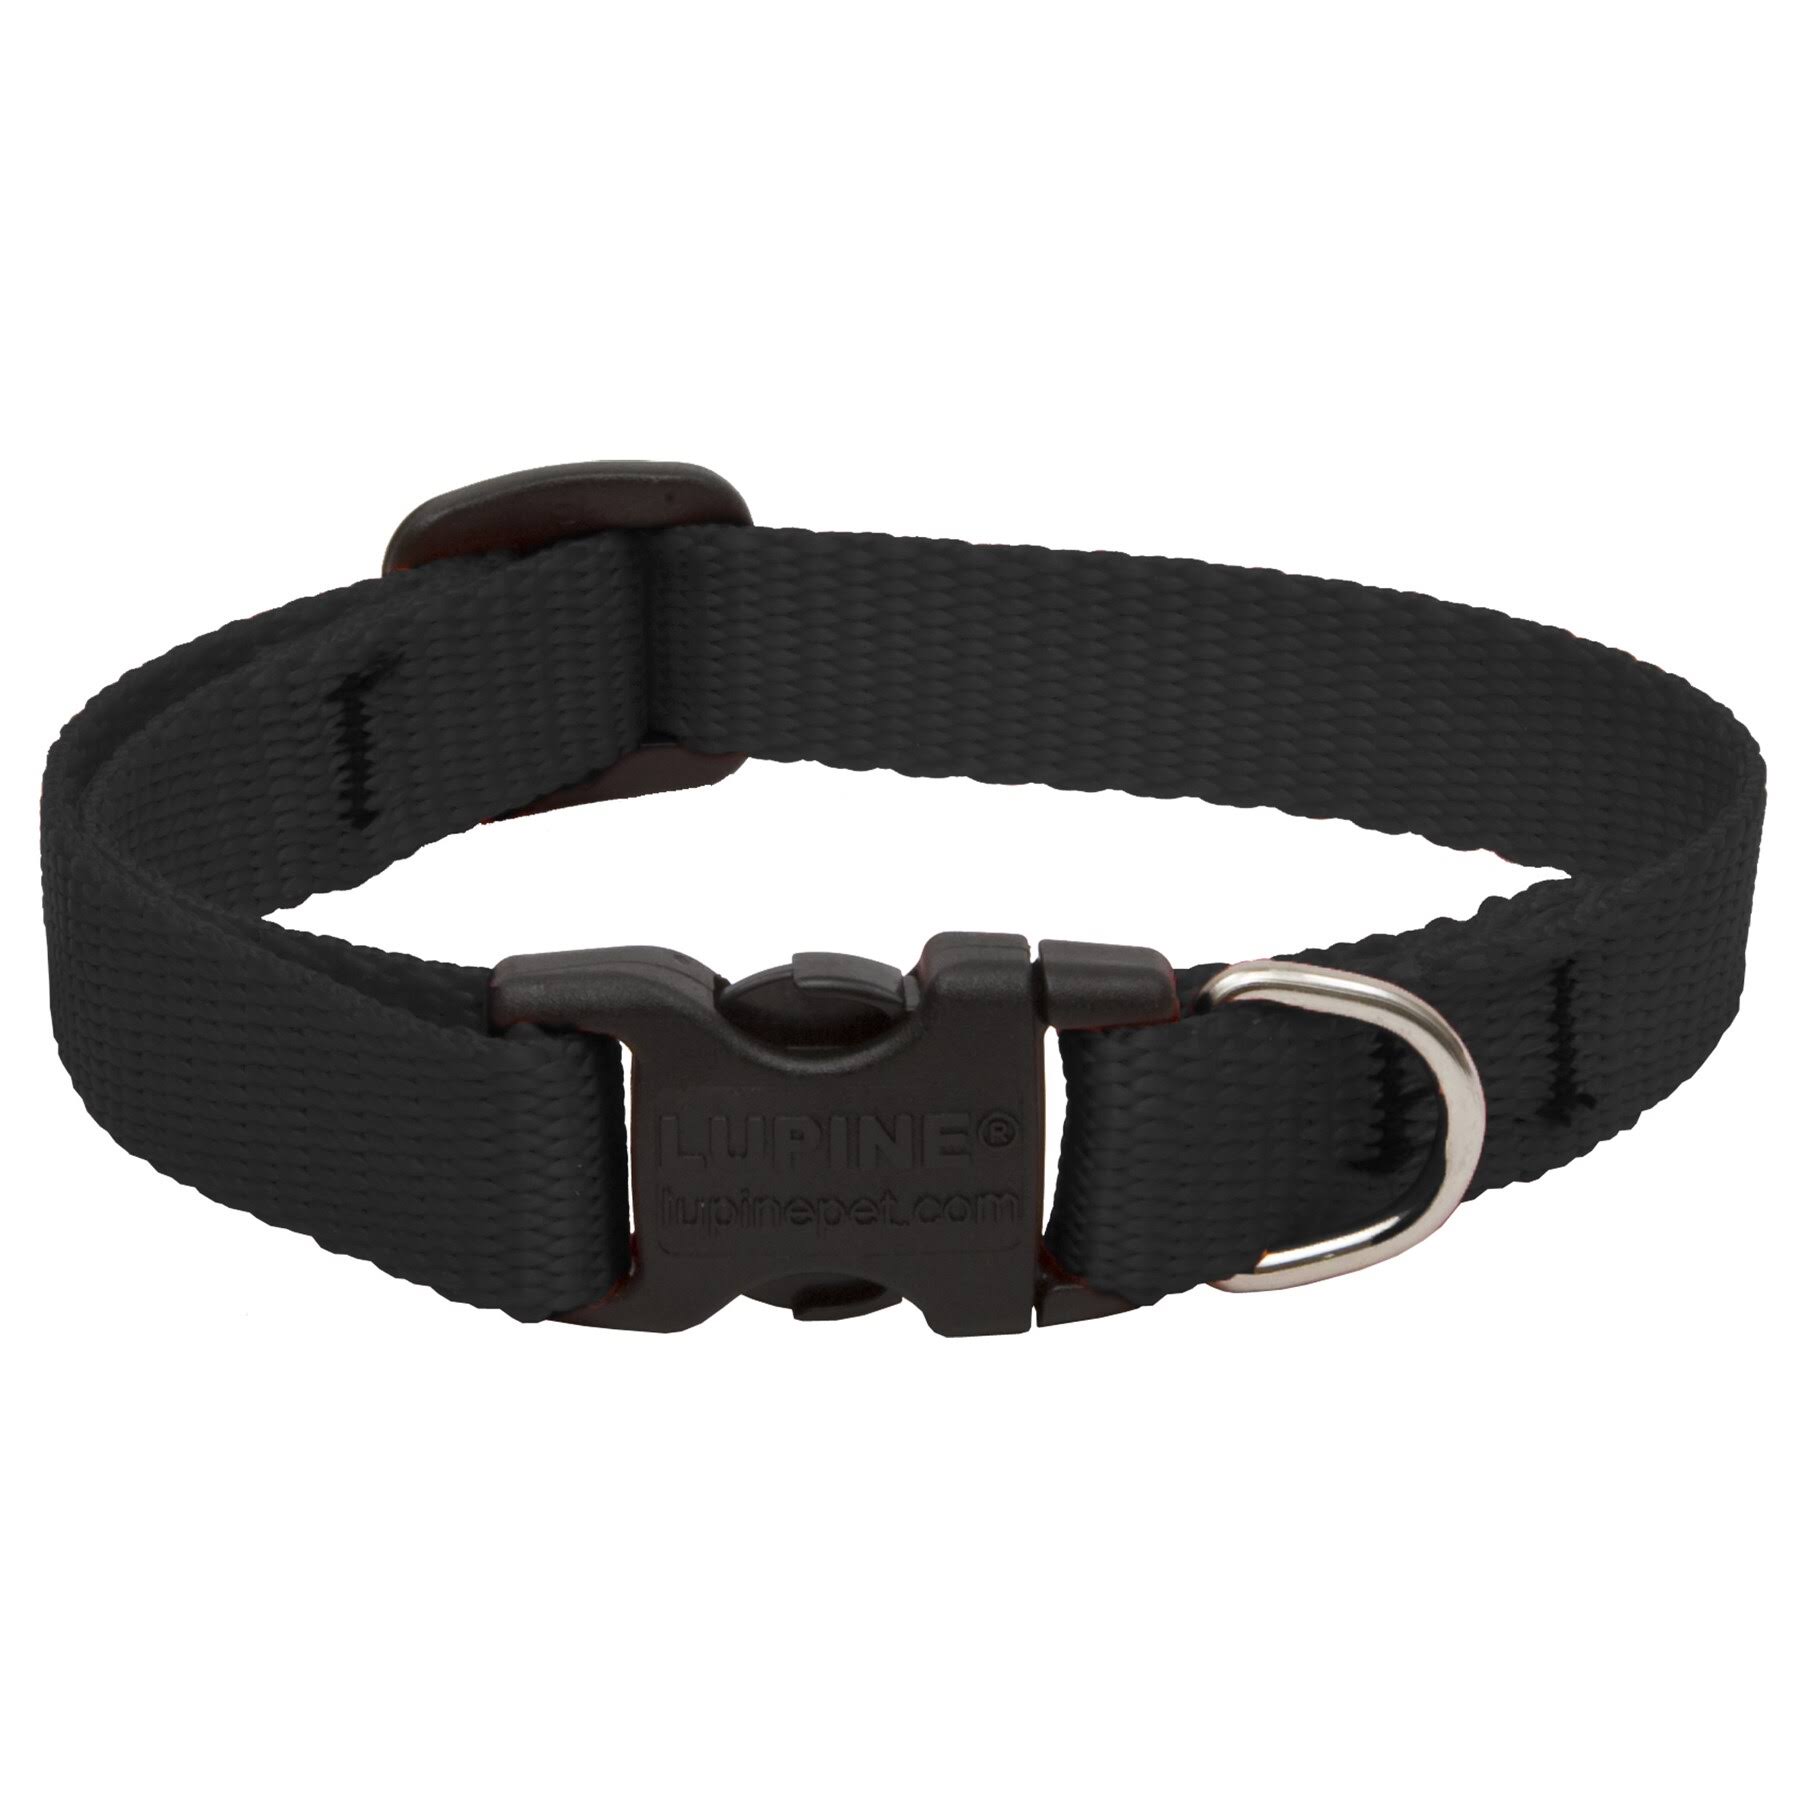 Lupine Adjustable Dog Collar - Black